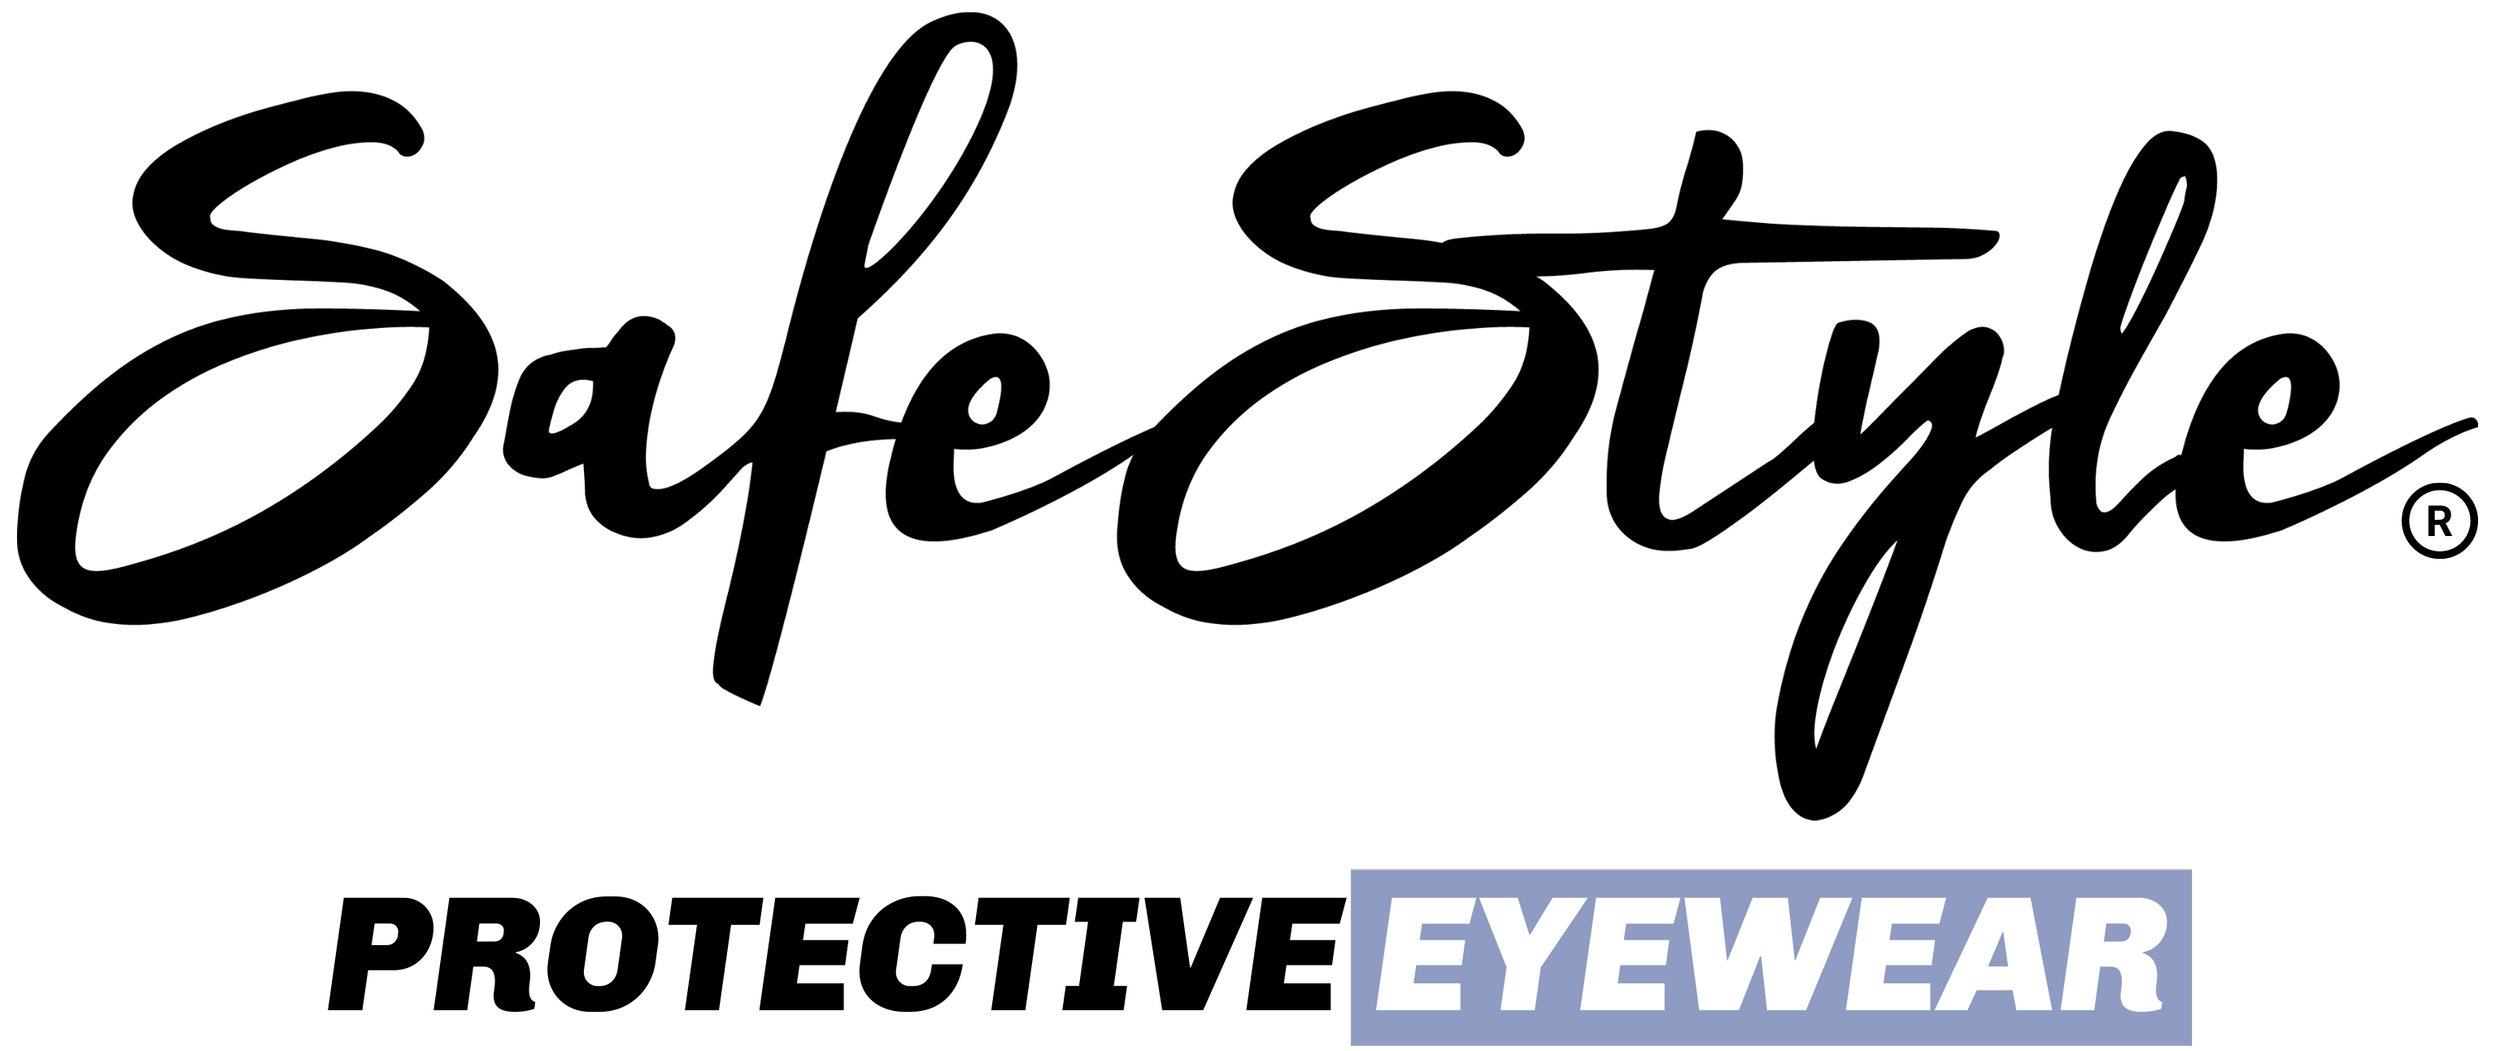 SafeStyle_Logo + Protective Eyewear Blue BLACK.png